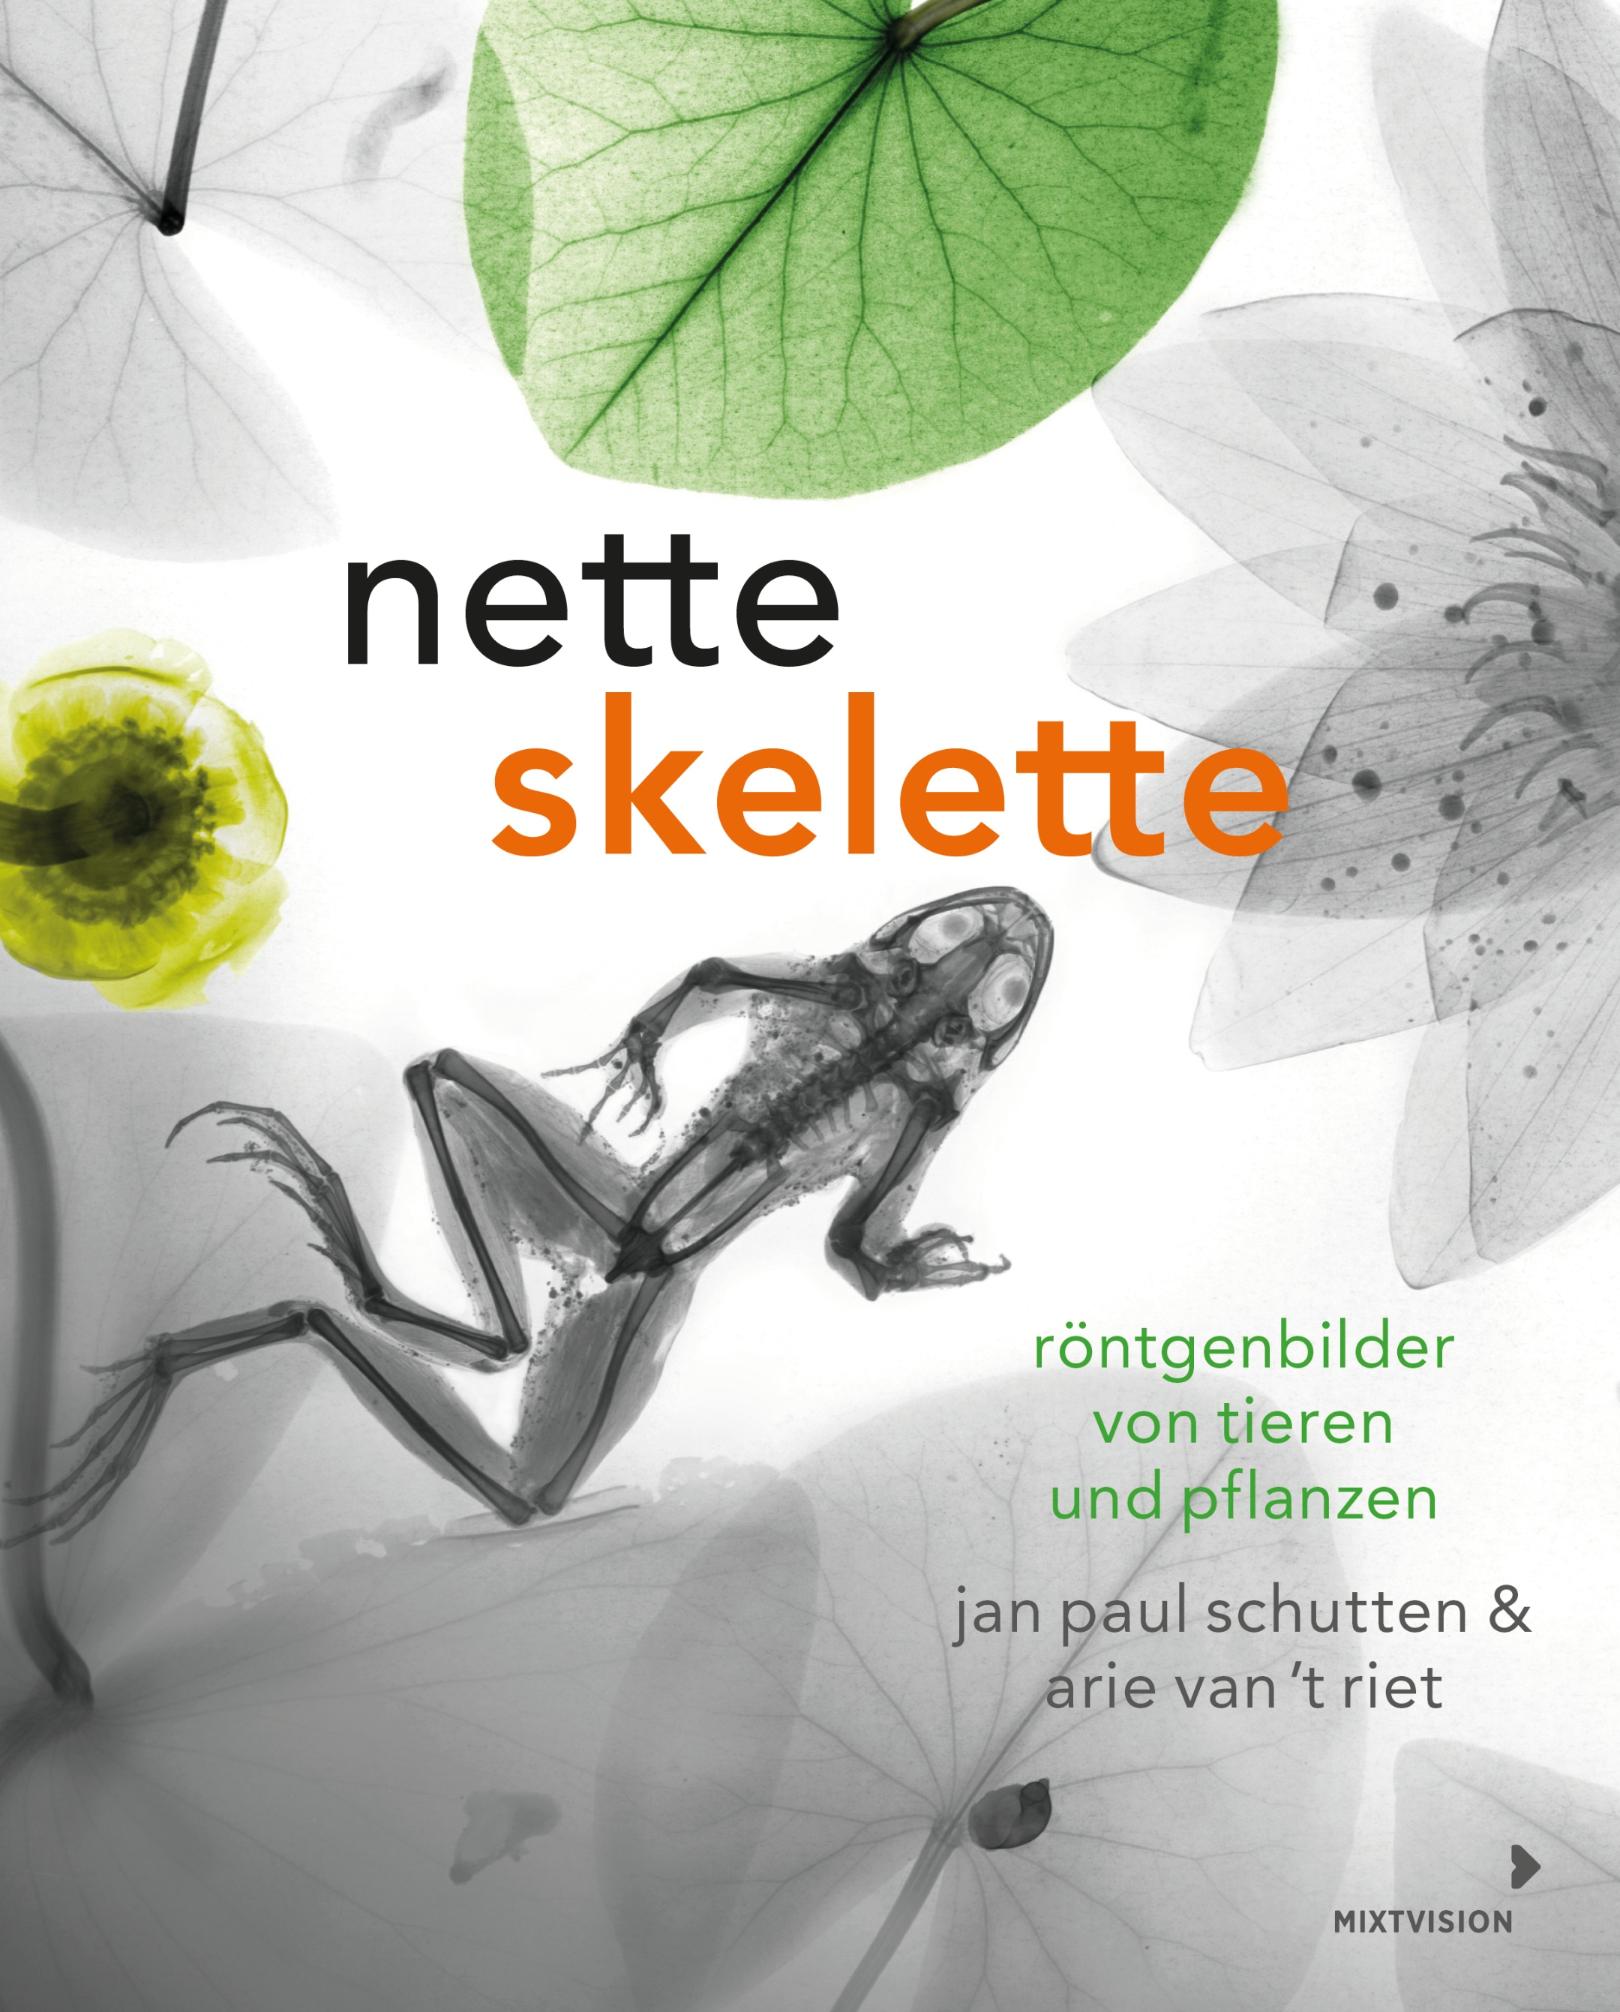 NetteSkelette (c) Mixtvision